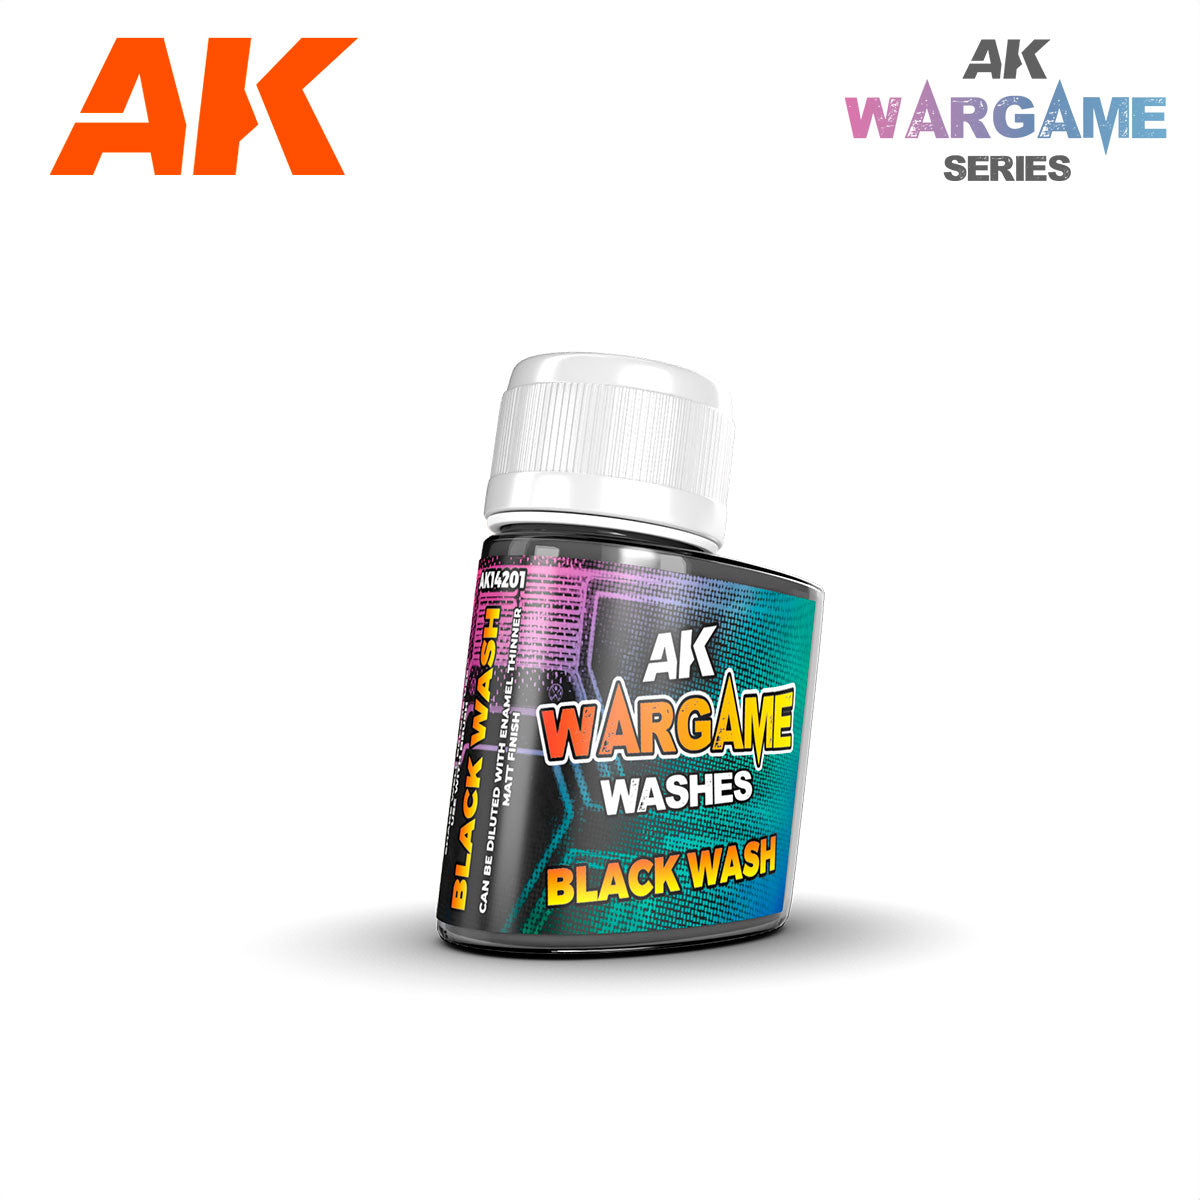 AK14201 - Black wash (35ml) - Wargame Wash